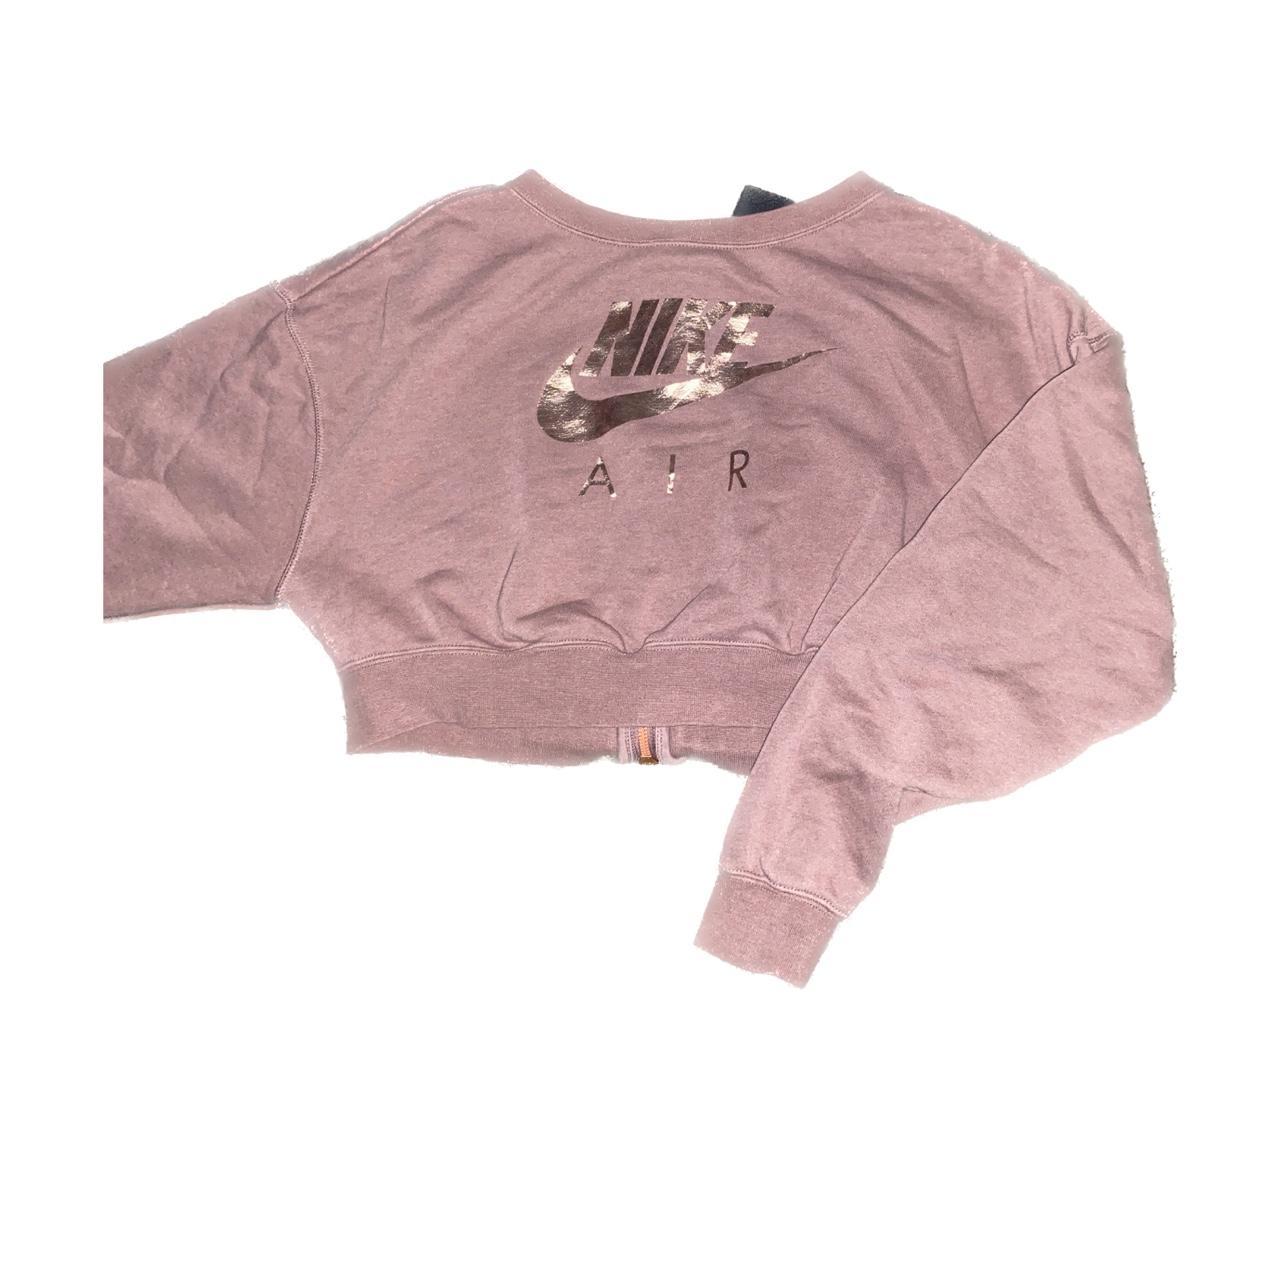 Cropped Nike sweatshirt with zipper in the back.... - Depop